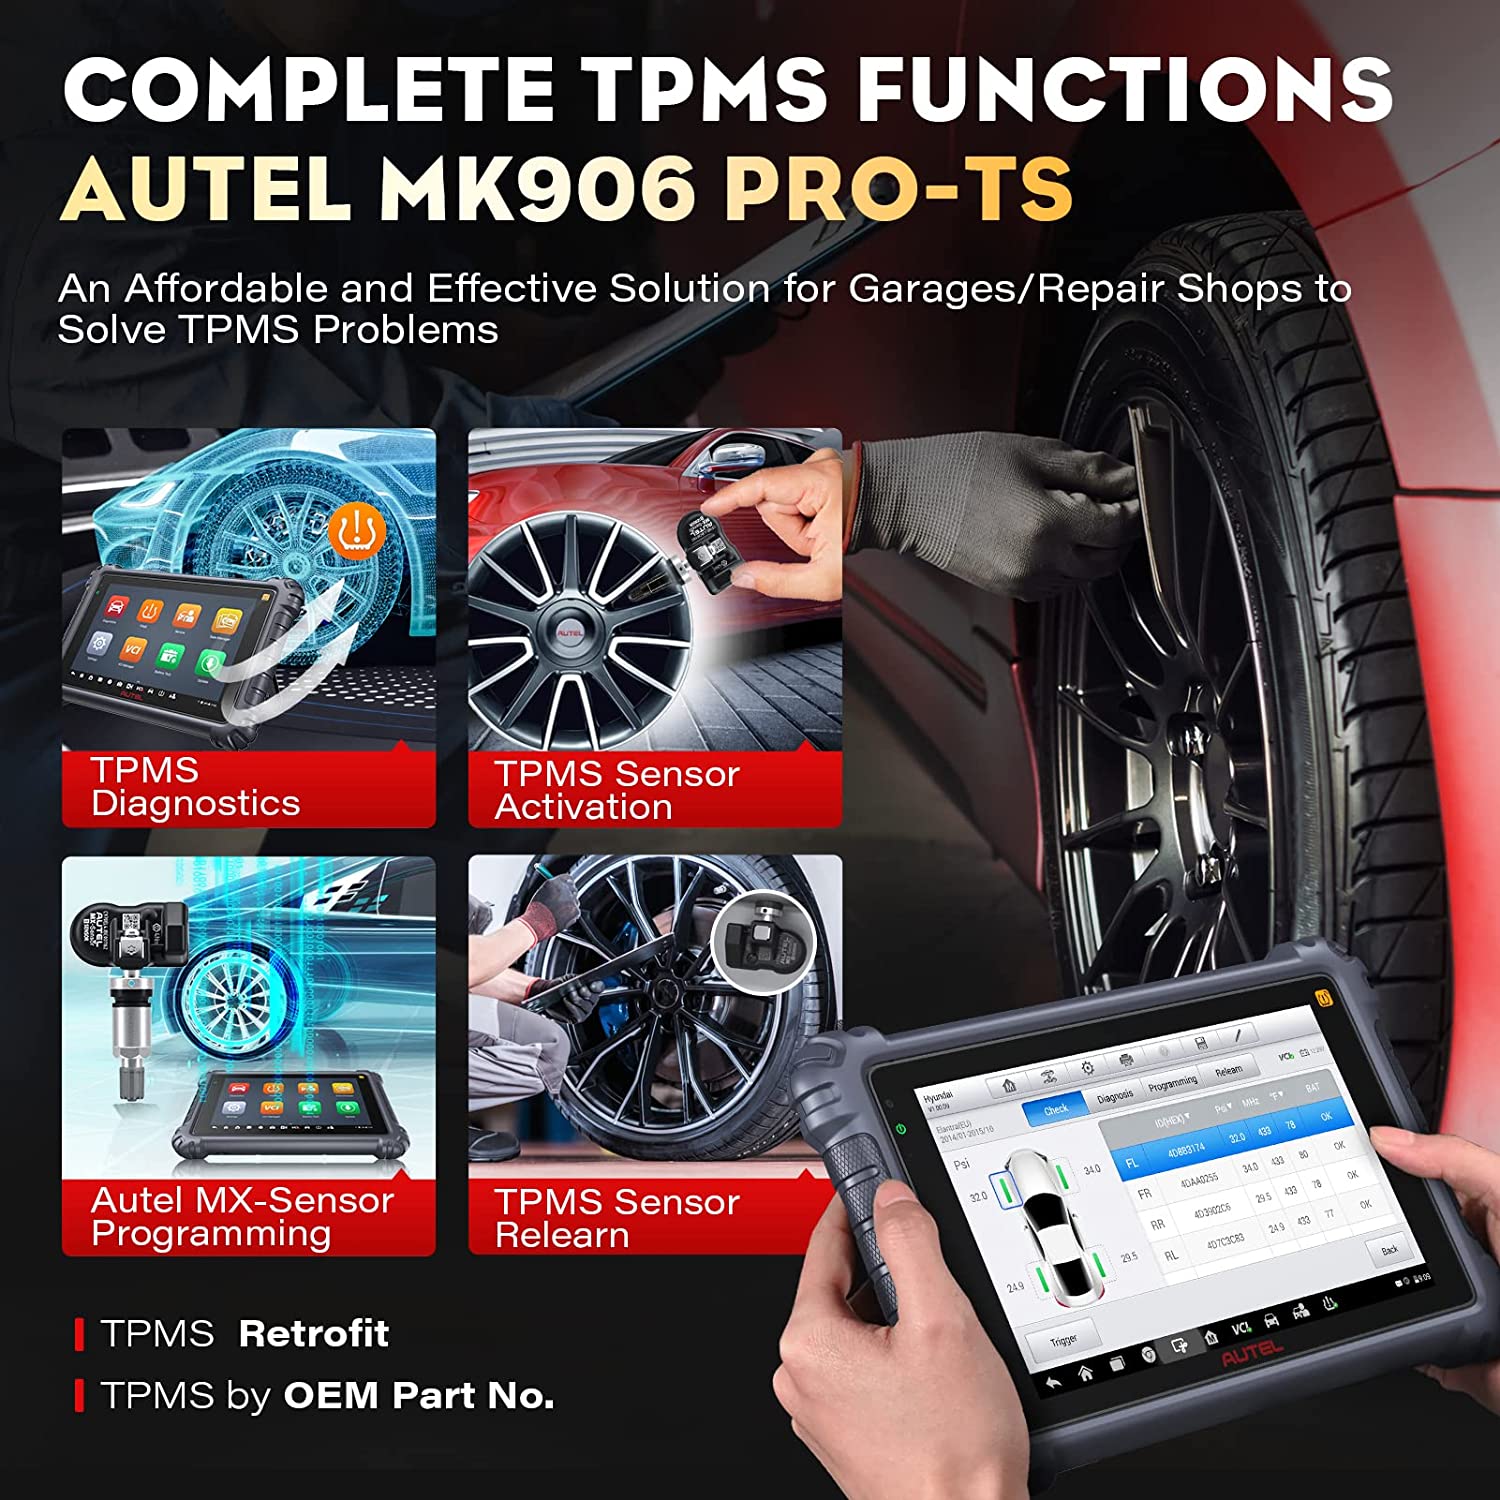 Autel MK906 Pro-TS has TPMS functions